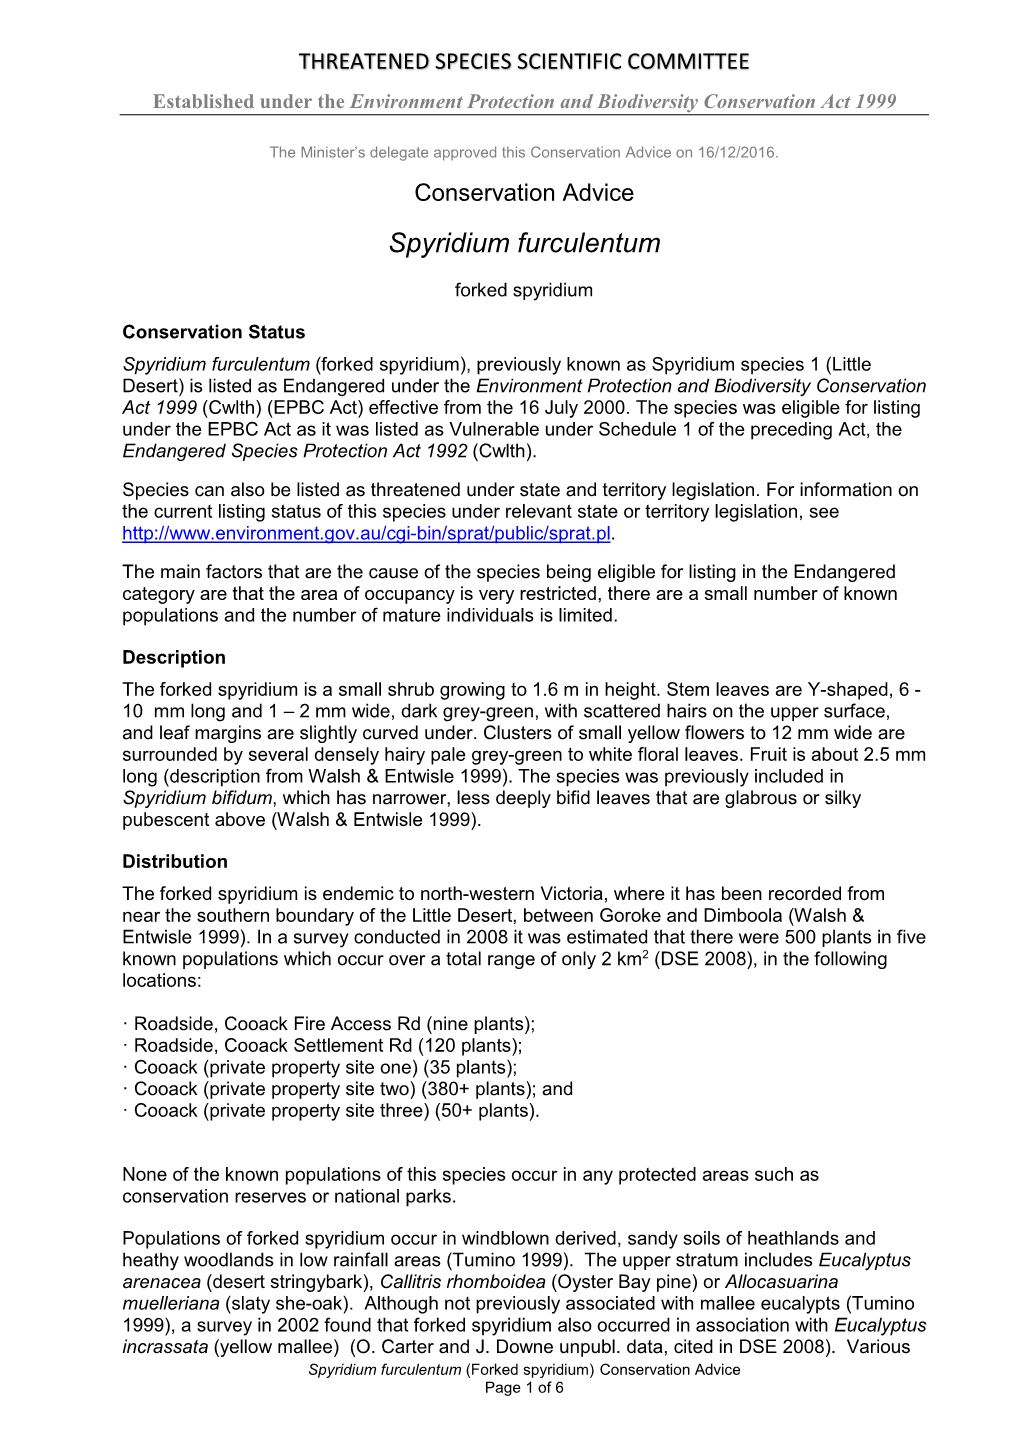 Conservation Advice Spyridium Furculentum Forked Spyridium